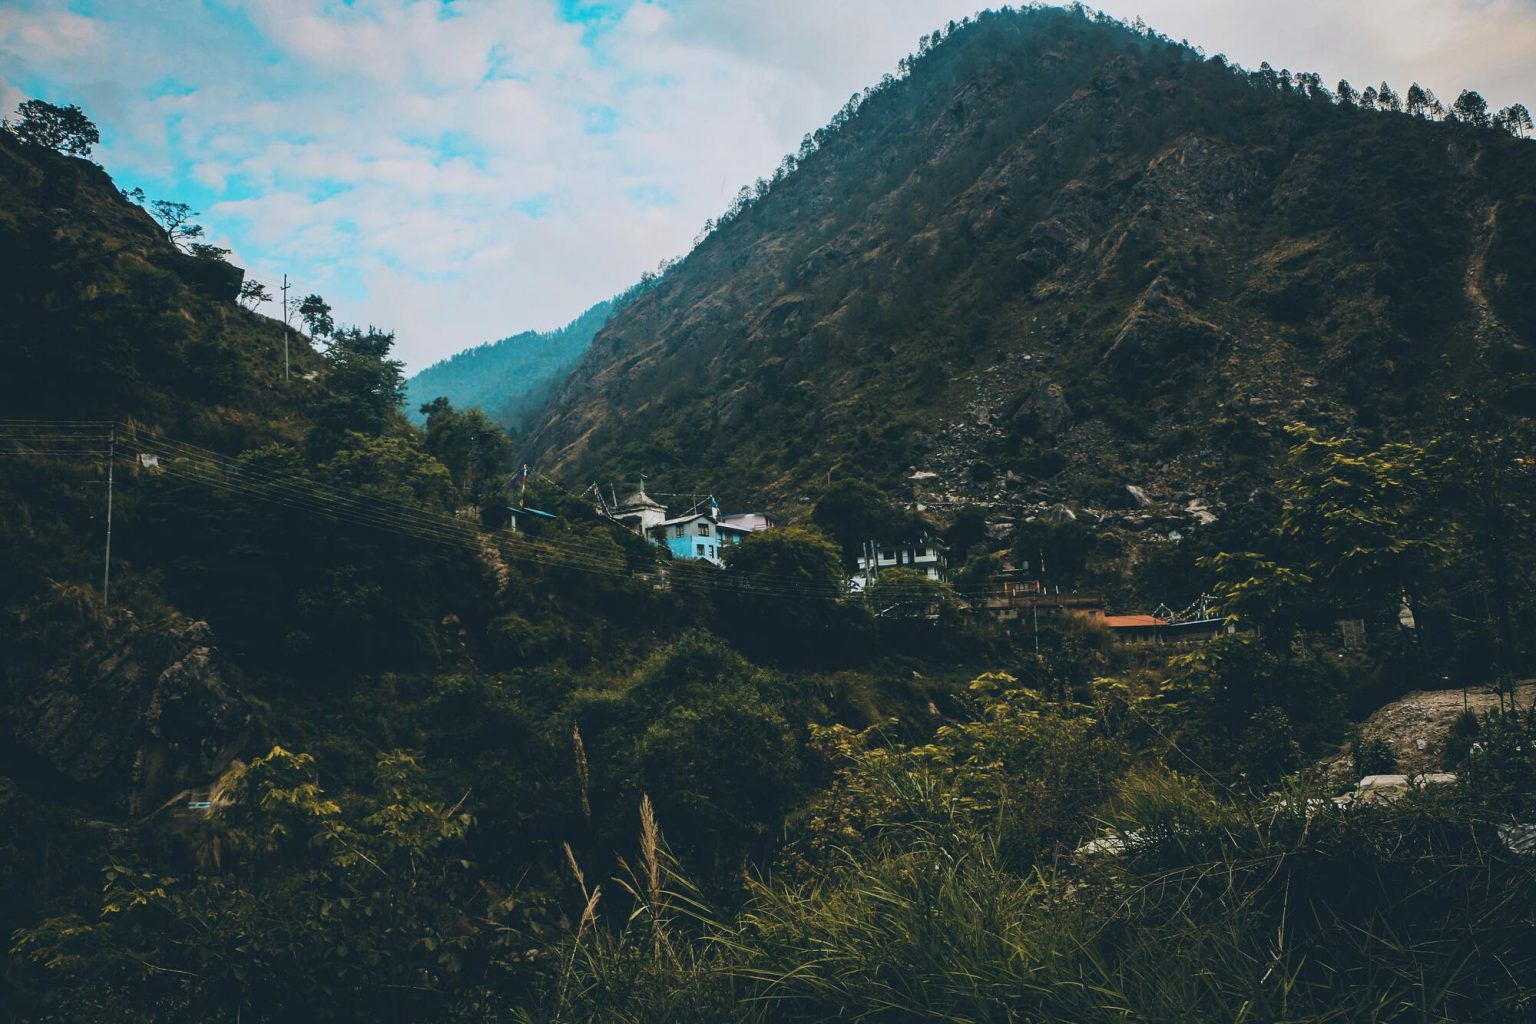 Syabrubesi, Langtang, Nepal - By Mountain People